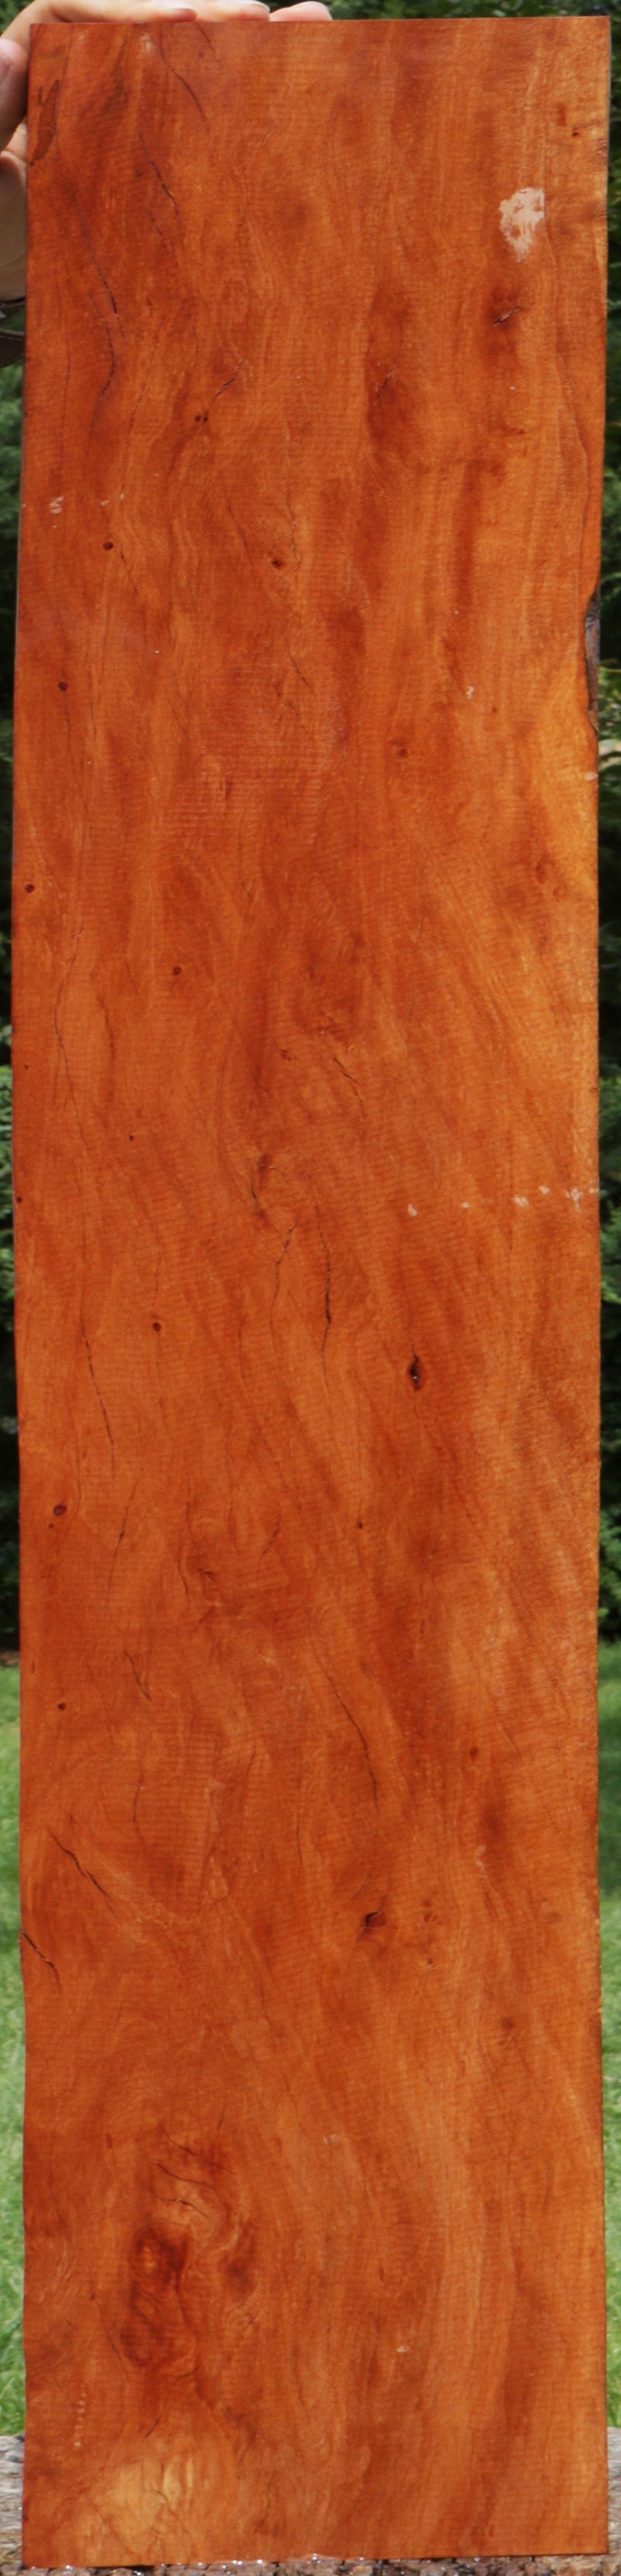 Lychee Lumber